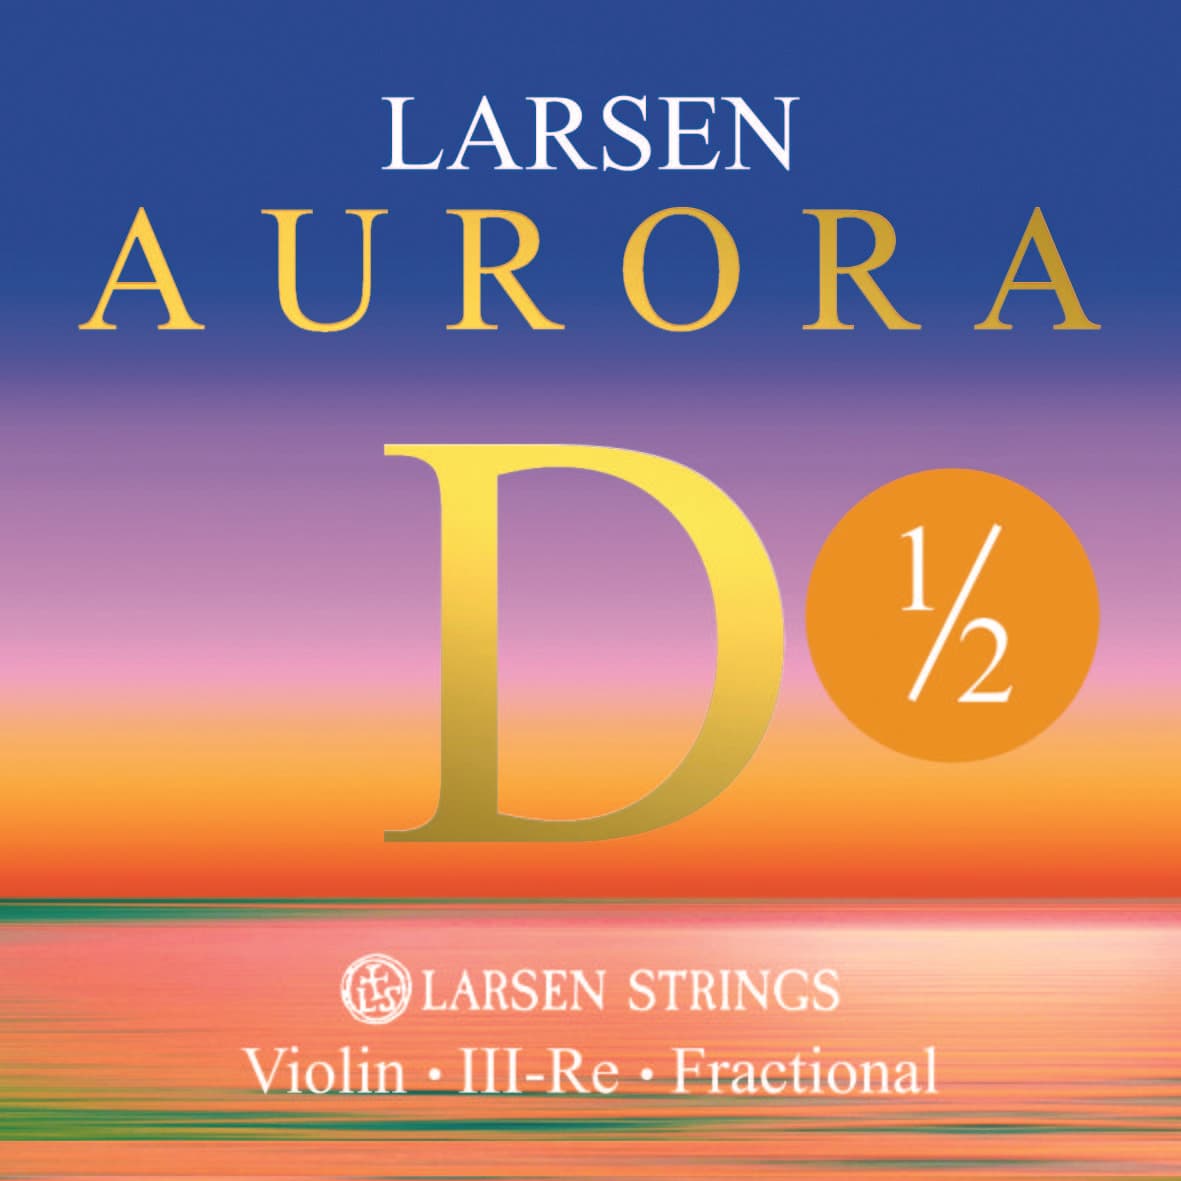 Larsen Aurora Violin D String